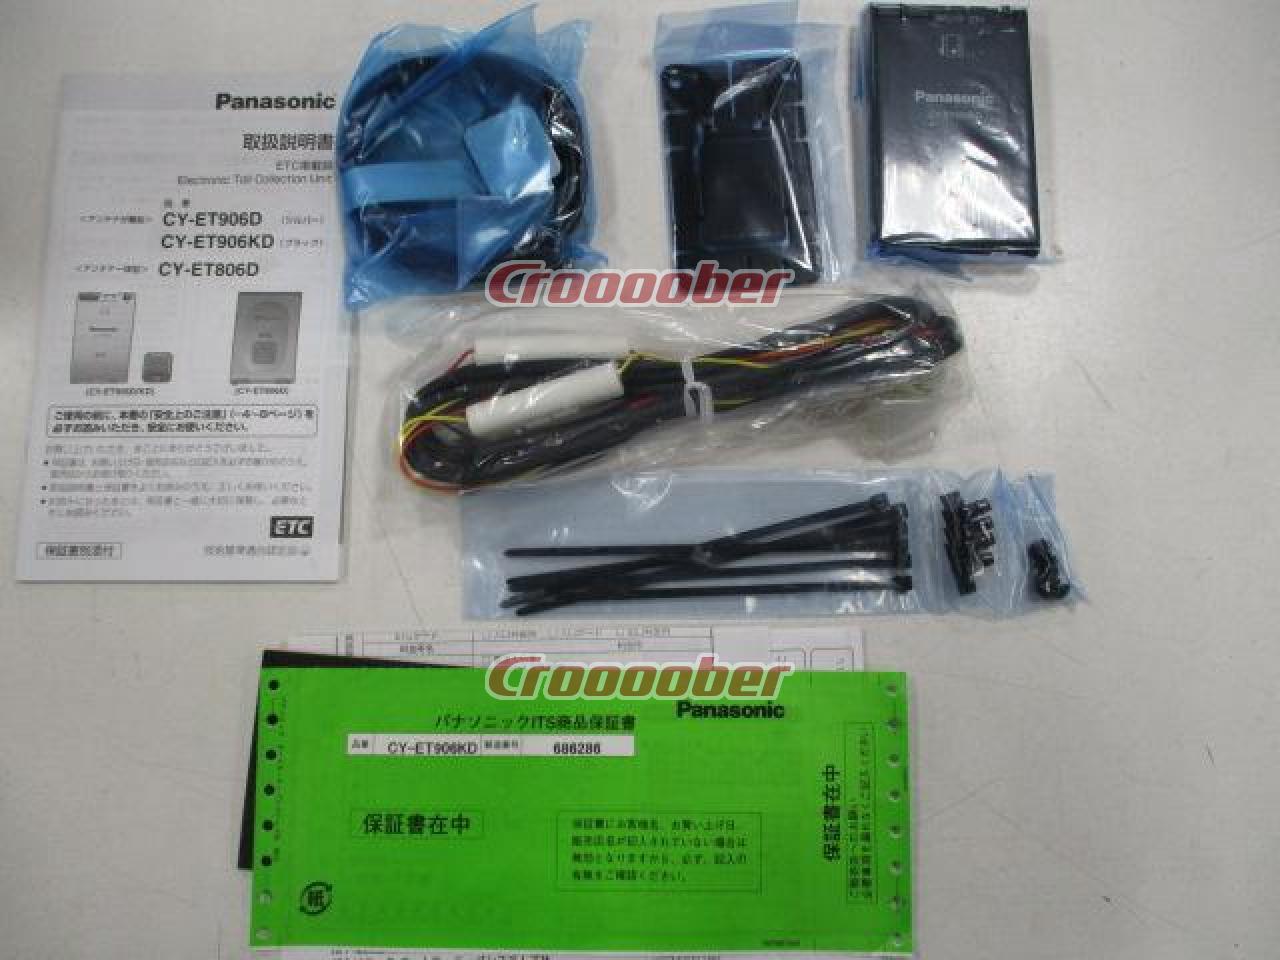 Panasonic CY-ET906KD | ETC Separate | Croooober